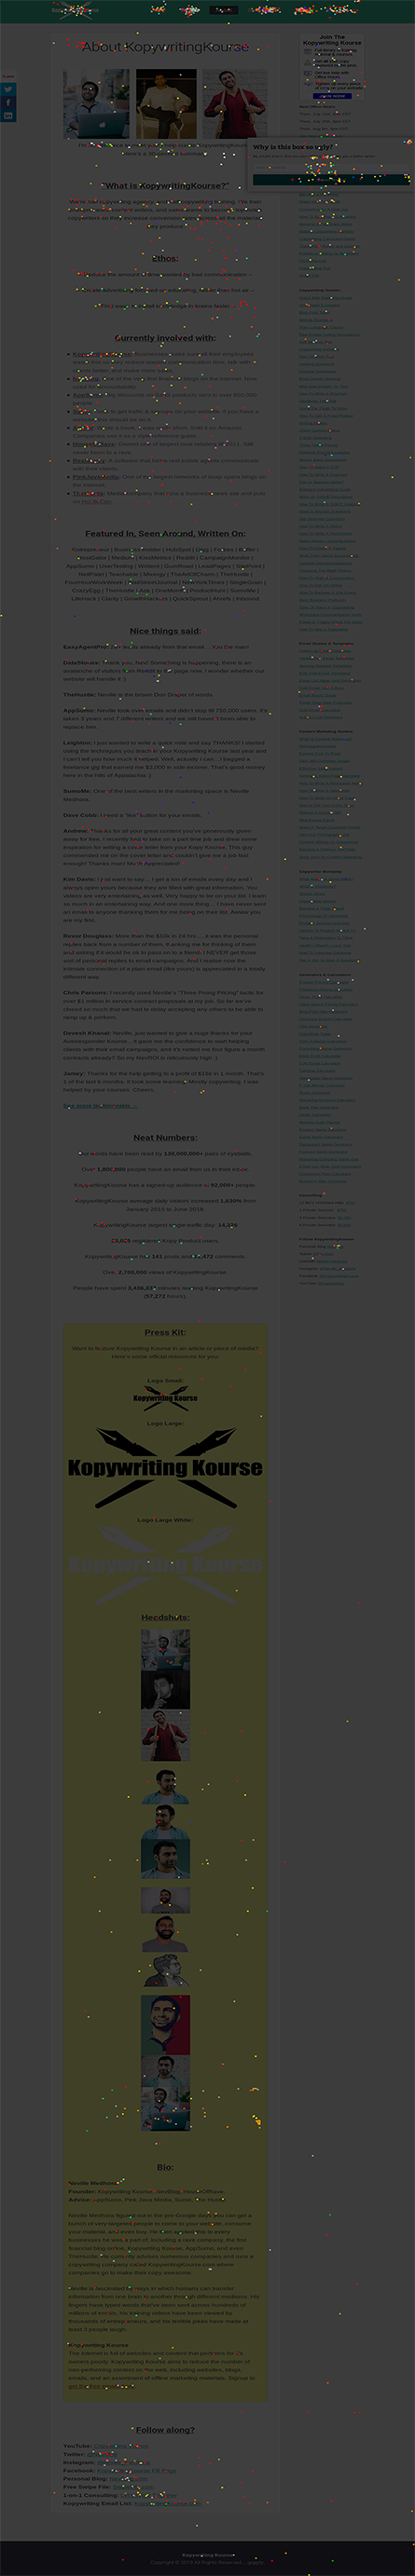 Kopywriting Kourse about page confetti